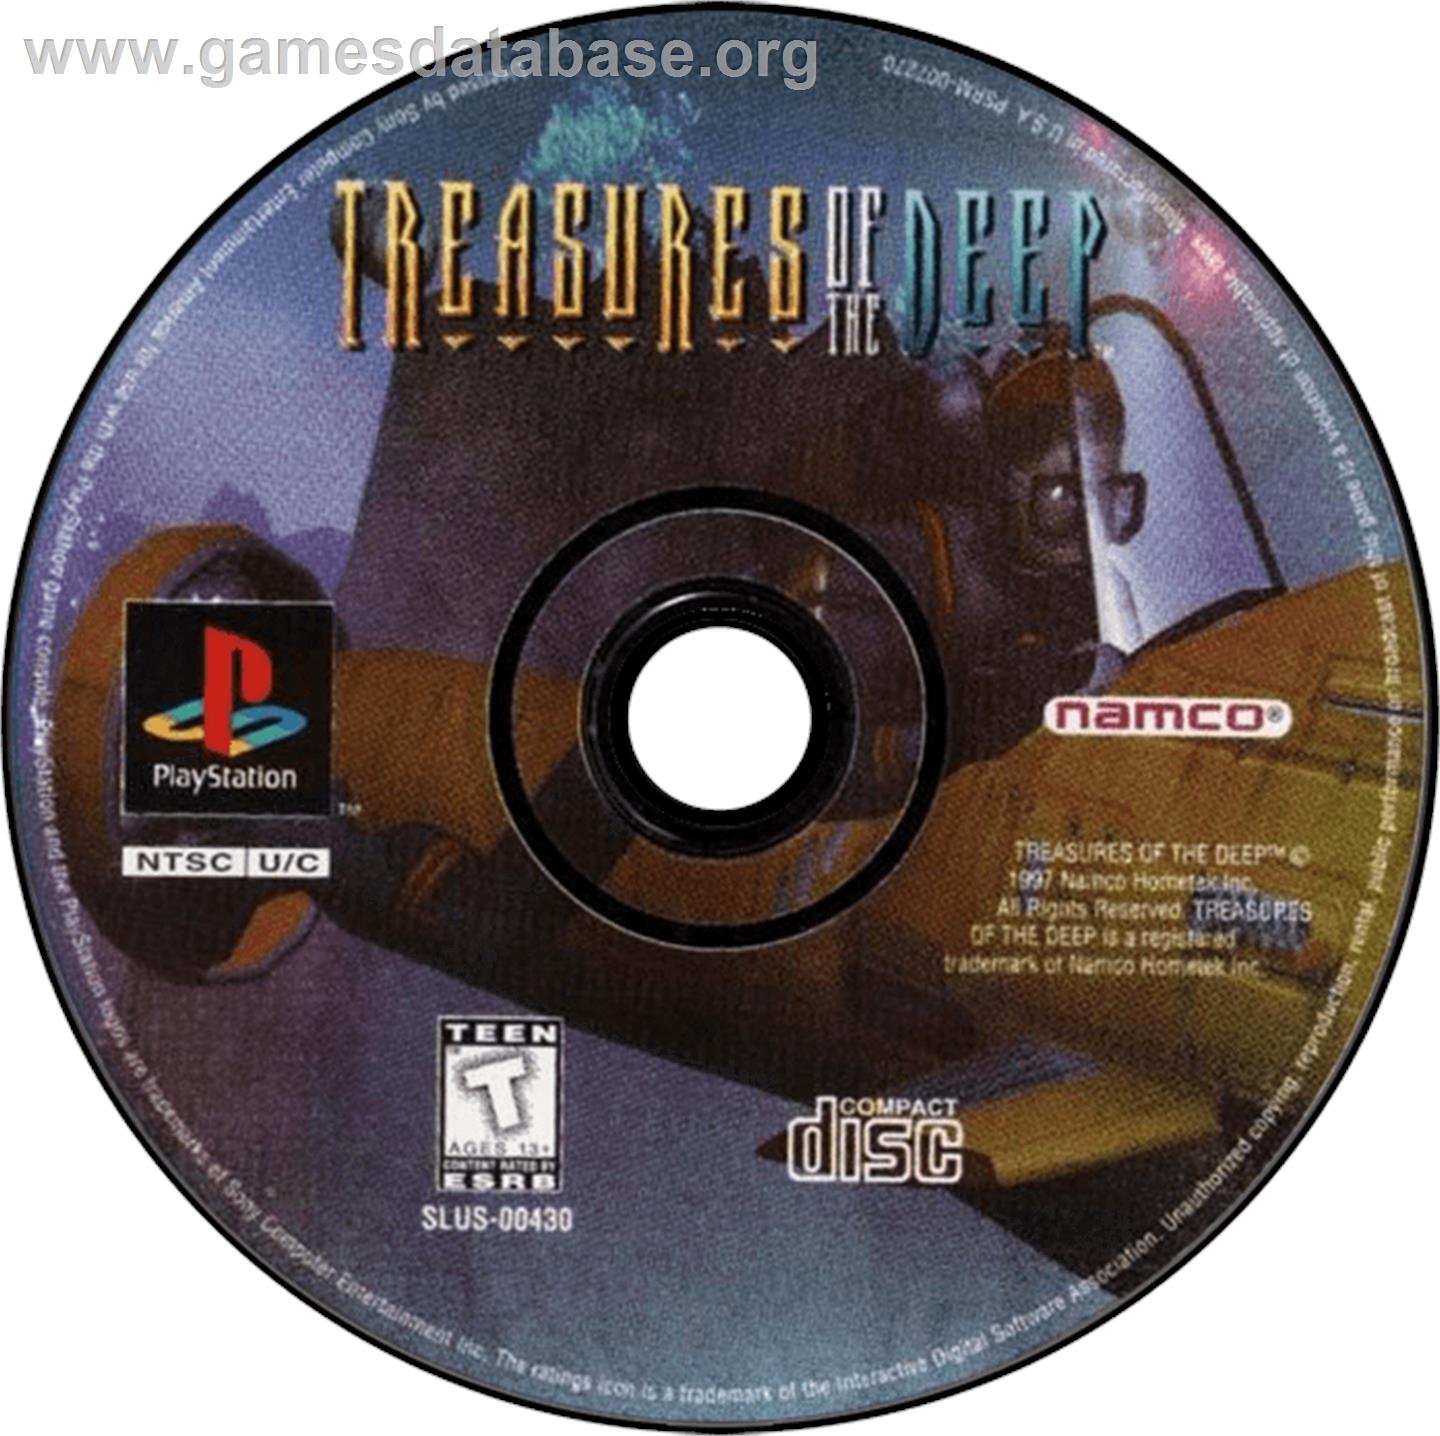 Treasures of the Deep - Sony Playstation - Artwork - Disc